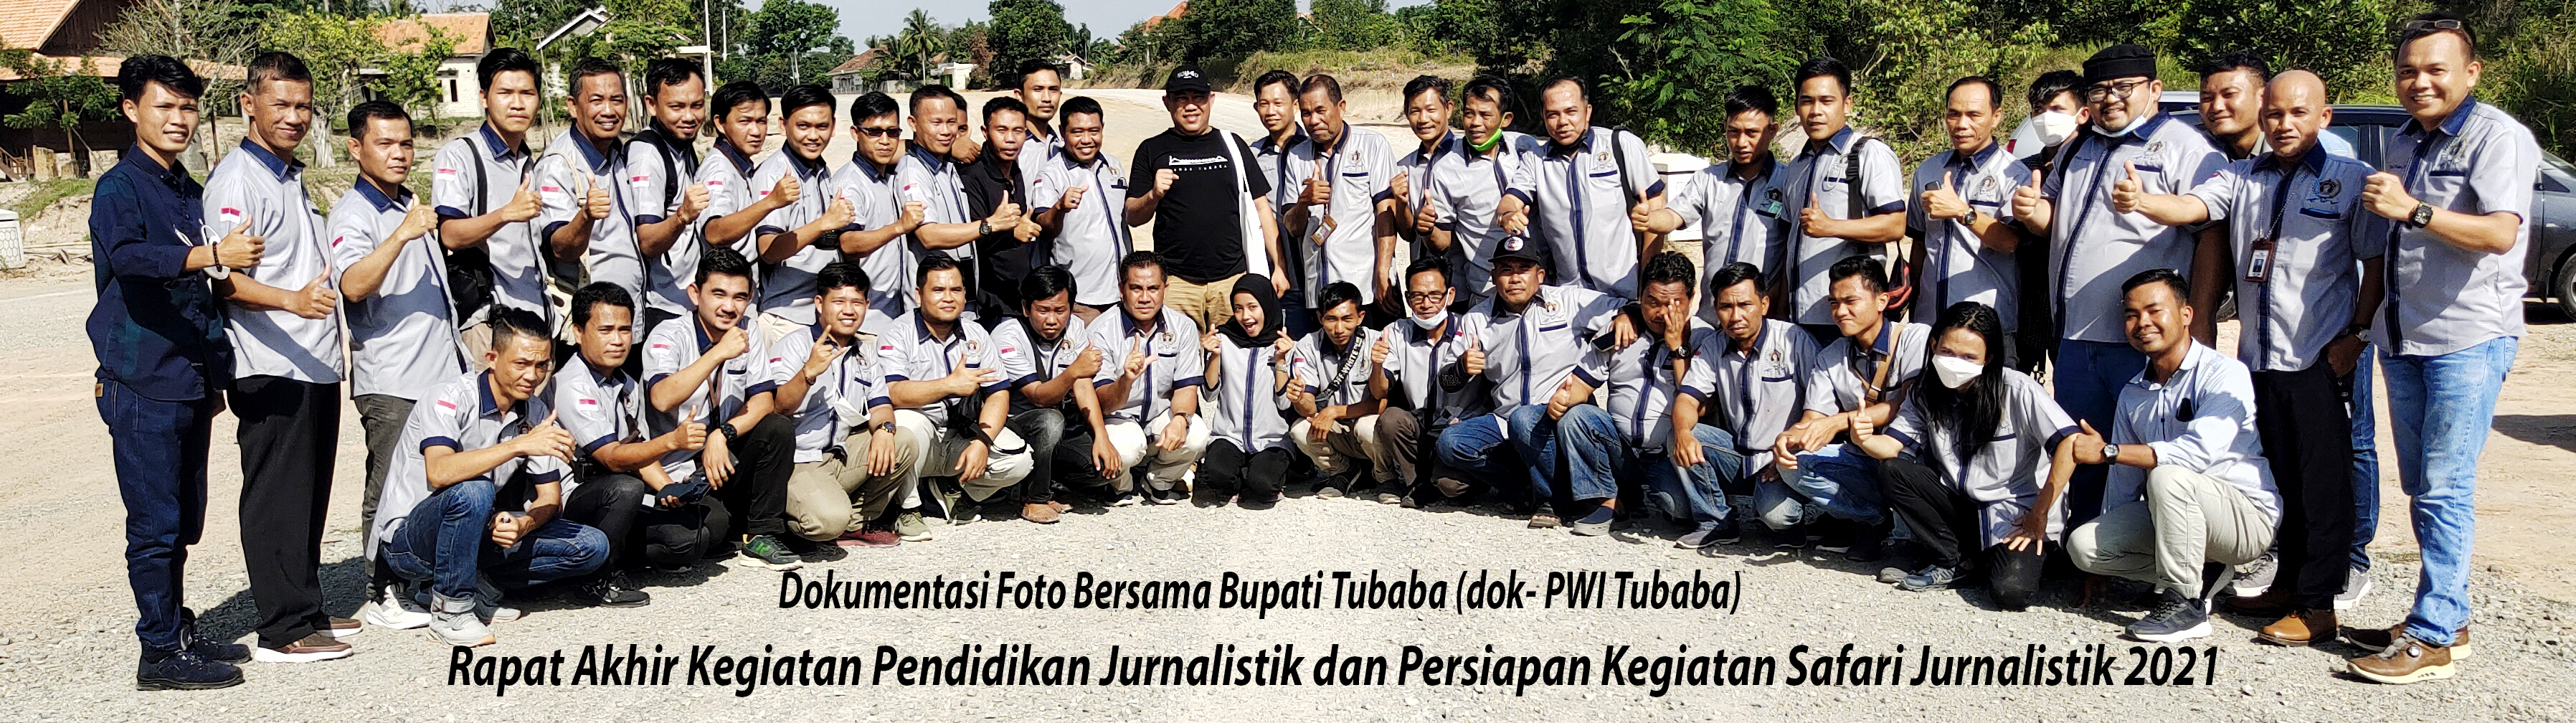 Dokumentasi Foto Bersama Bupati Tubaba (dok- PWI Tubaba)